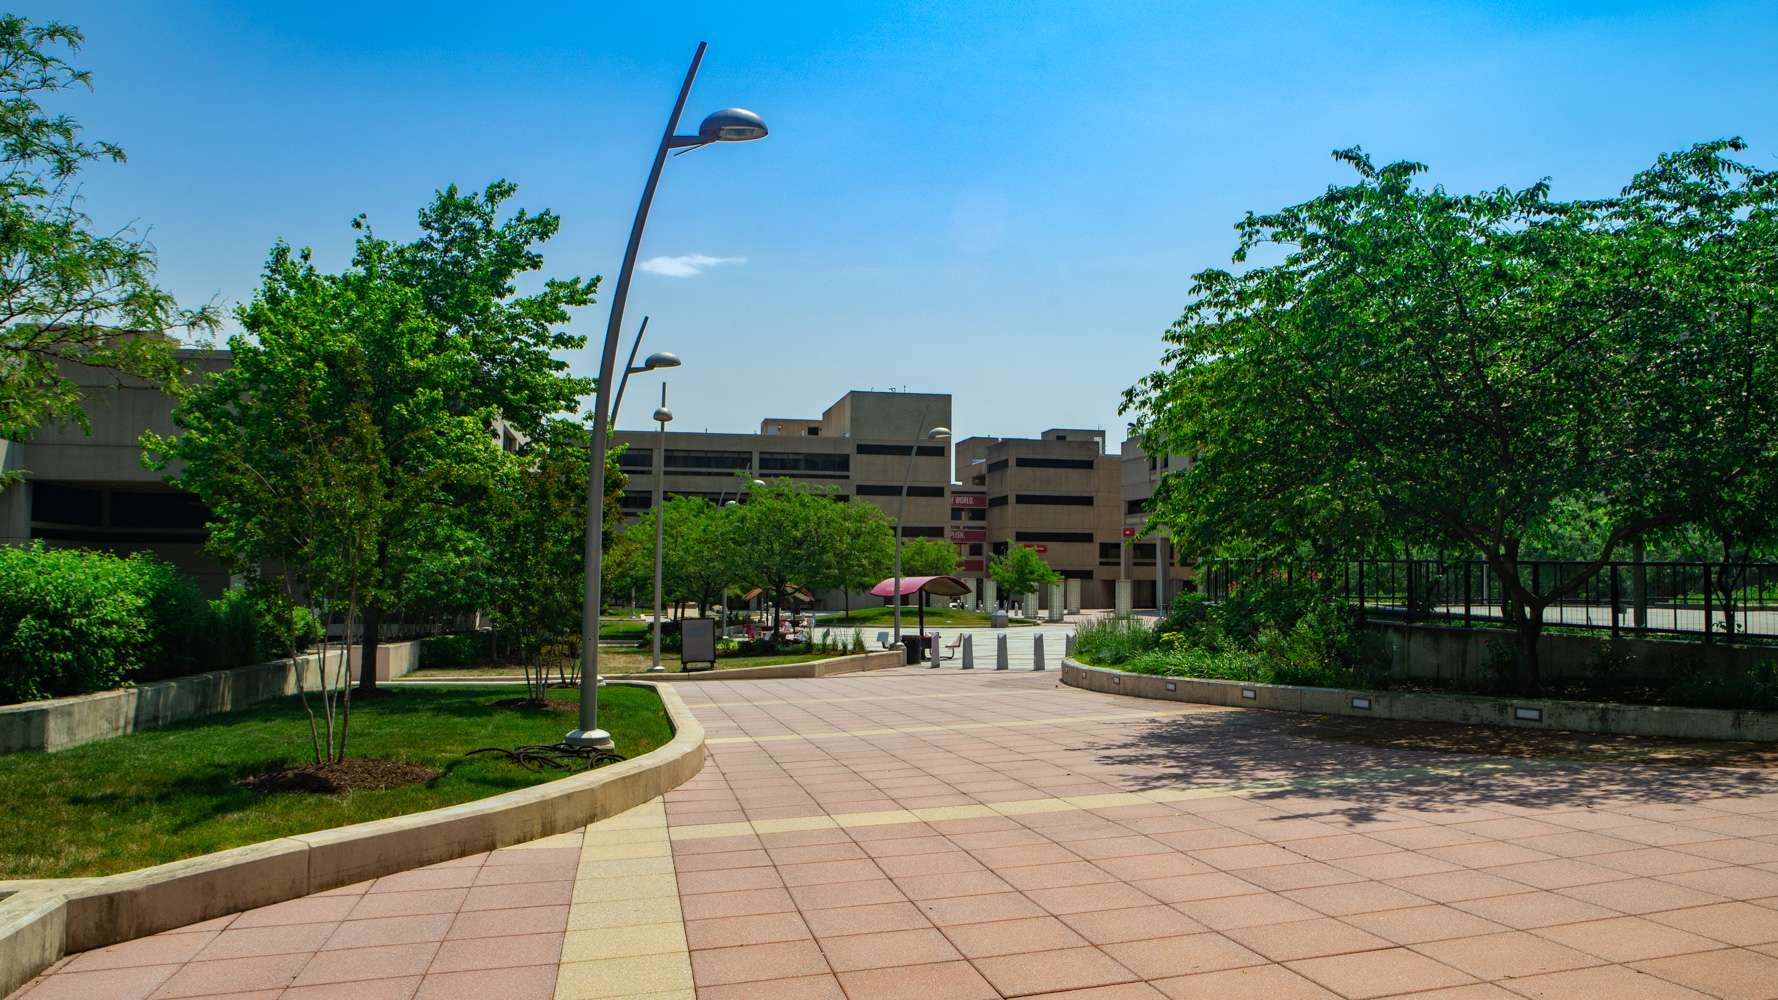 Hospital landscape and walkway at Howard University Hospital